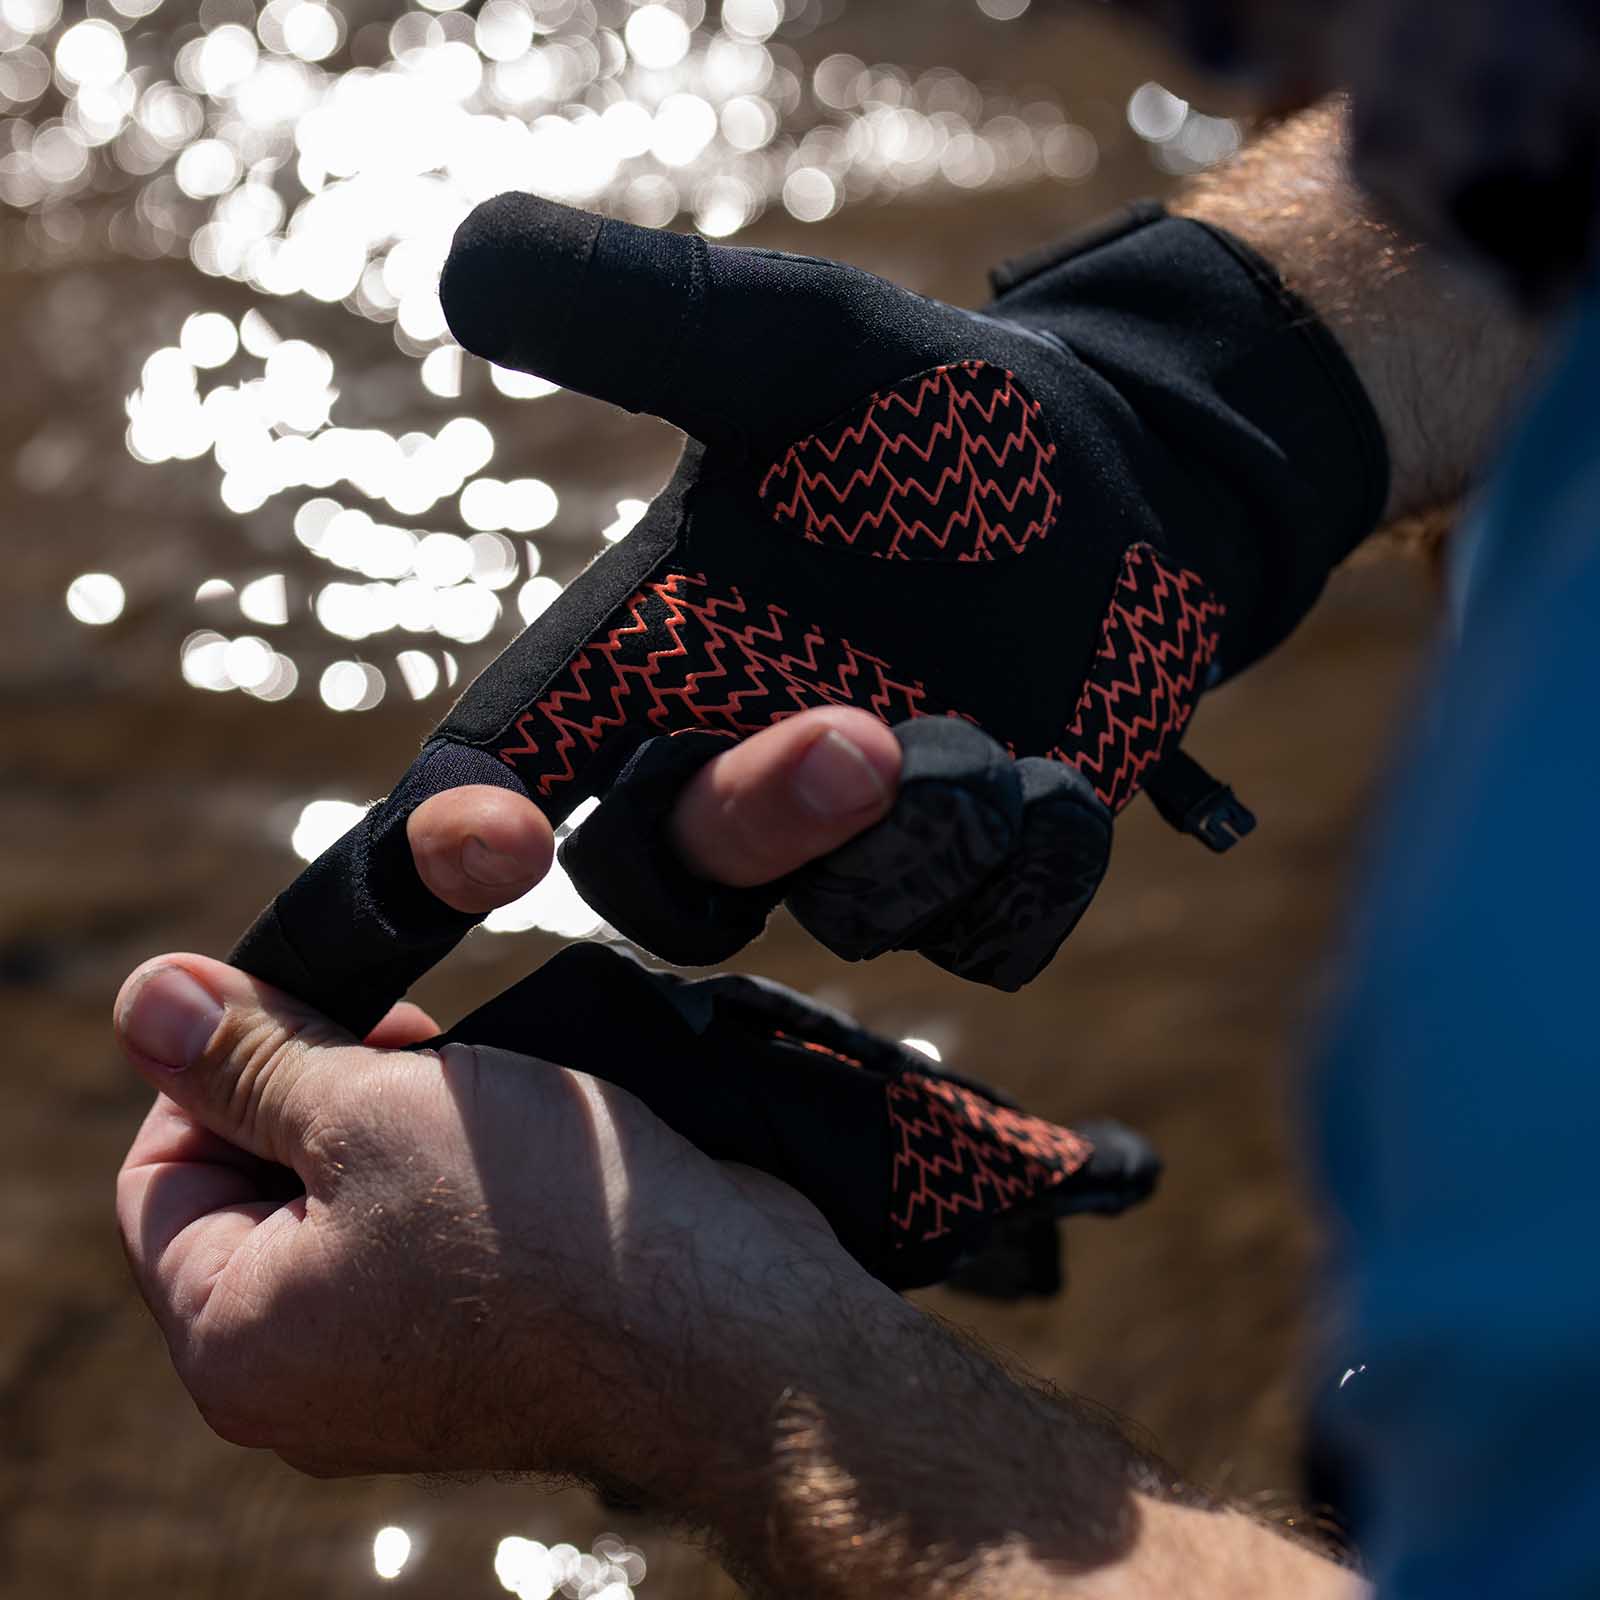 KastKing Mountain Mist Winter Fishing Gloves, Best Winter Warm Gloves for  Fishing